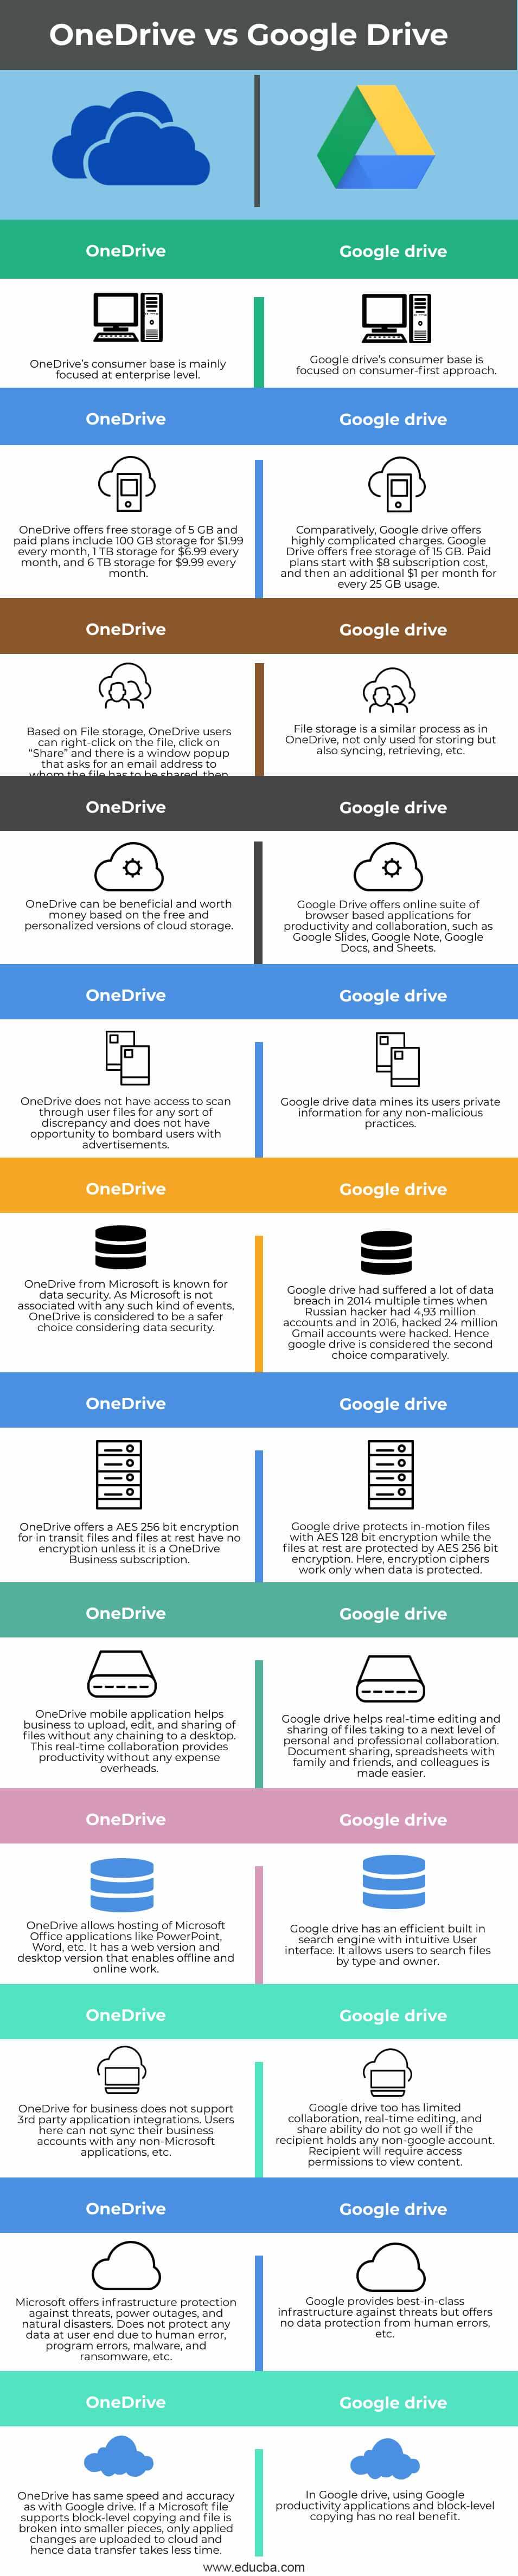 OneDrive-vs-Google-drive-info